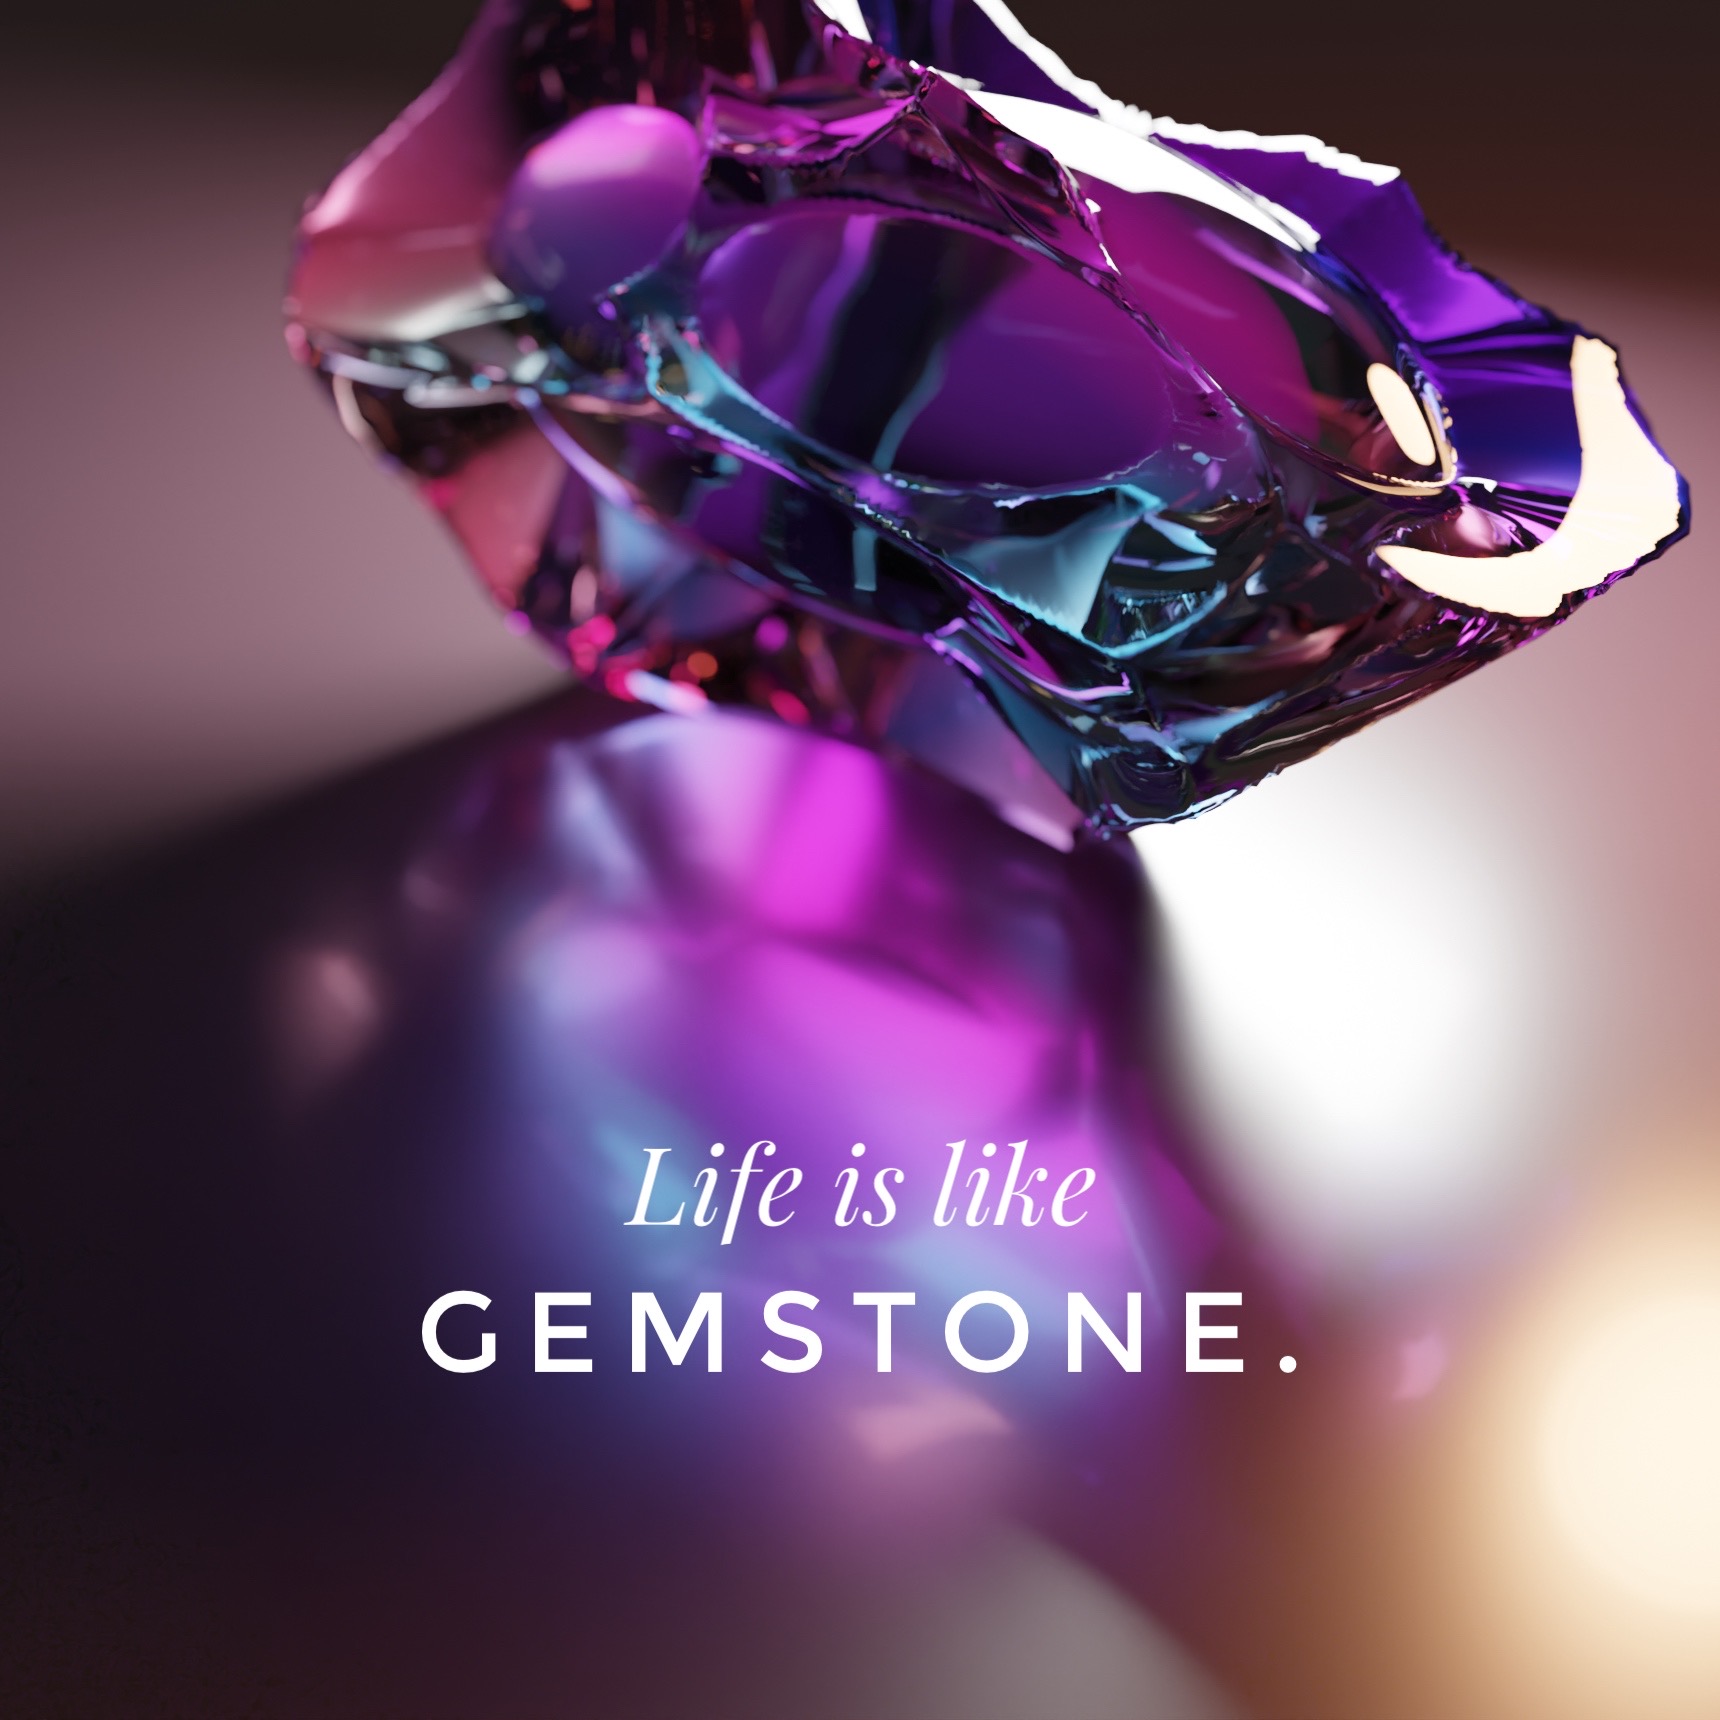 Life is like gemstone